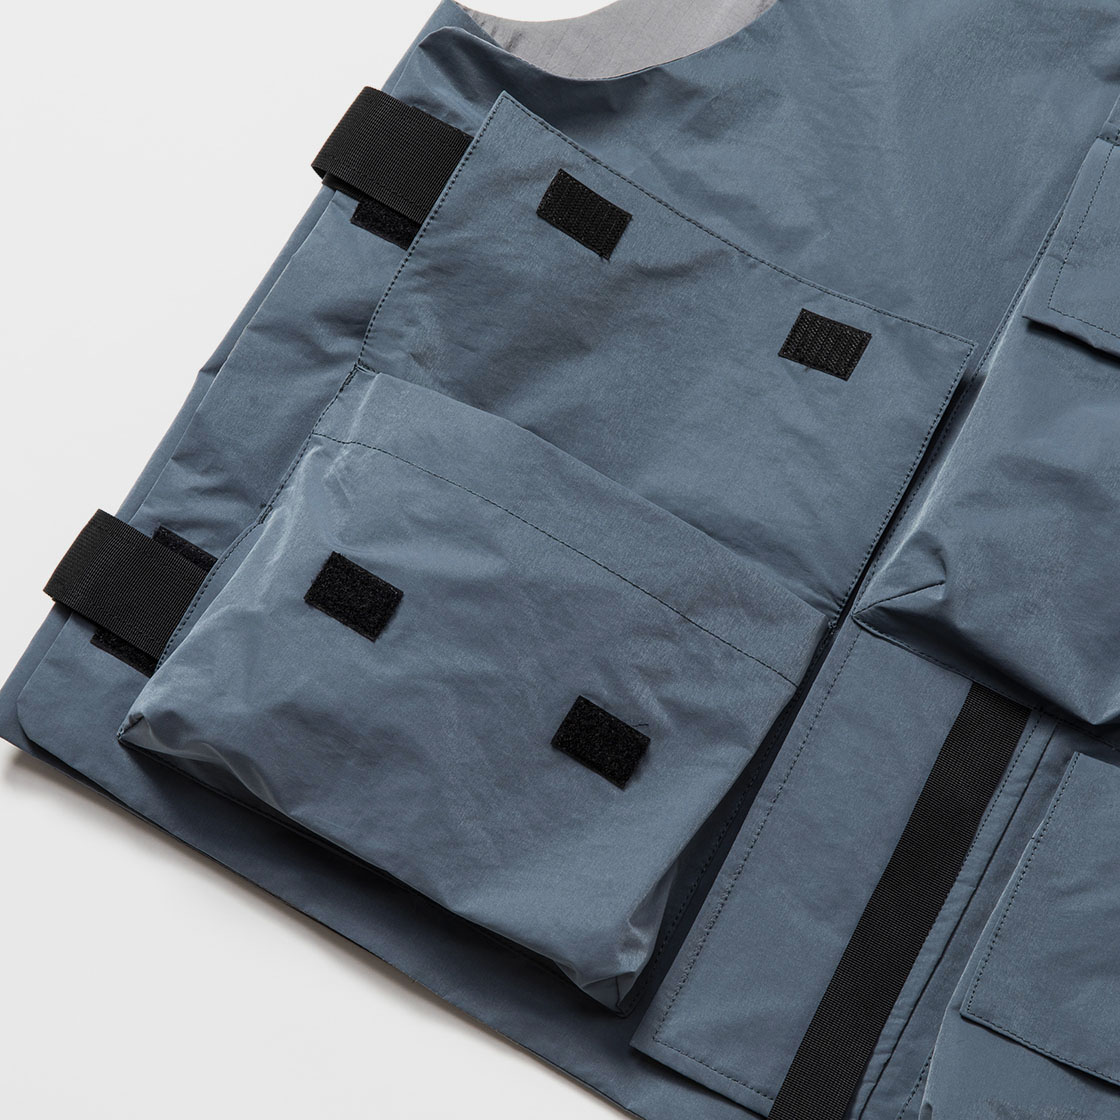 Crisp Nylon Body Armor Vest / Blue Grey